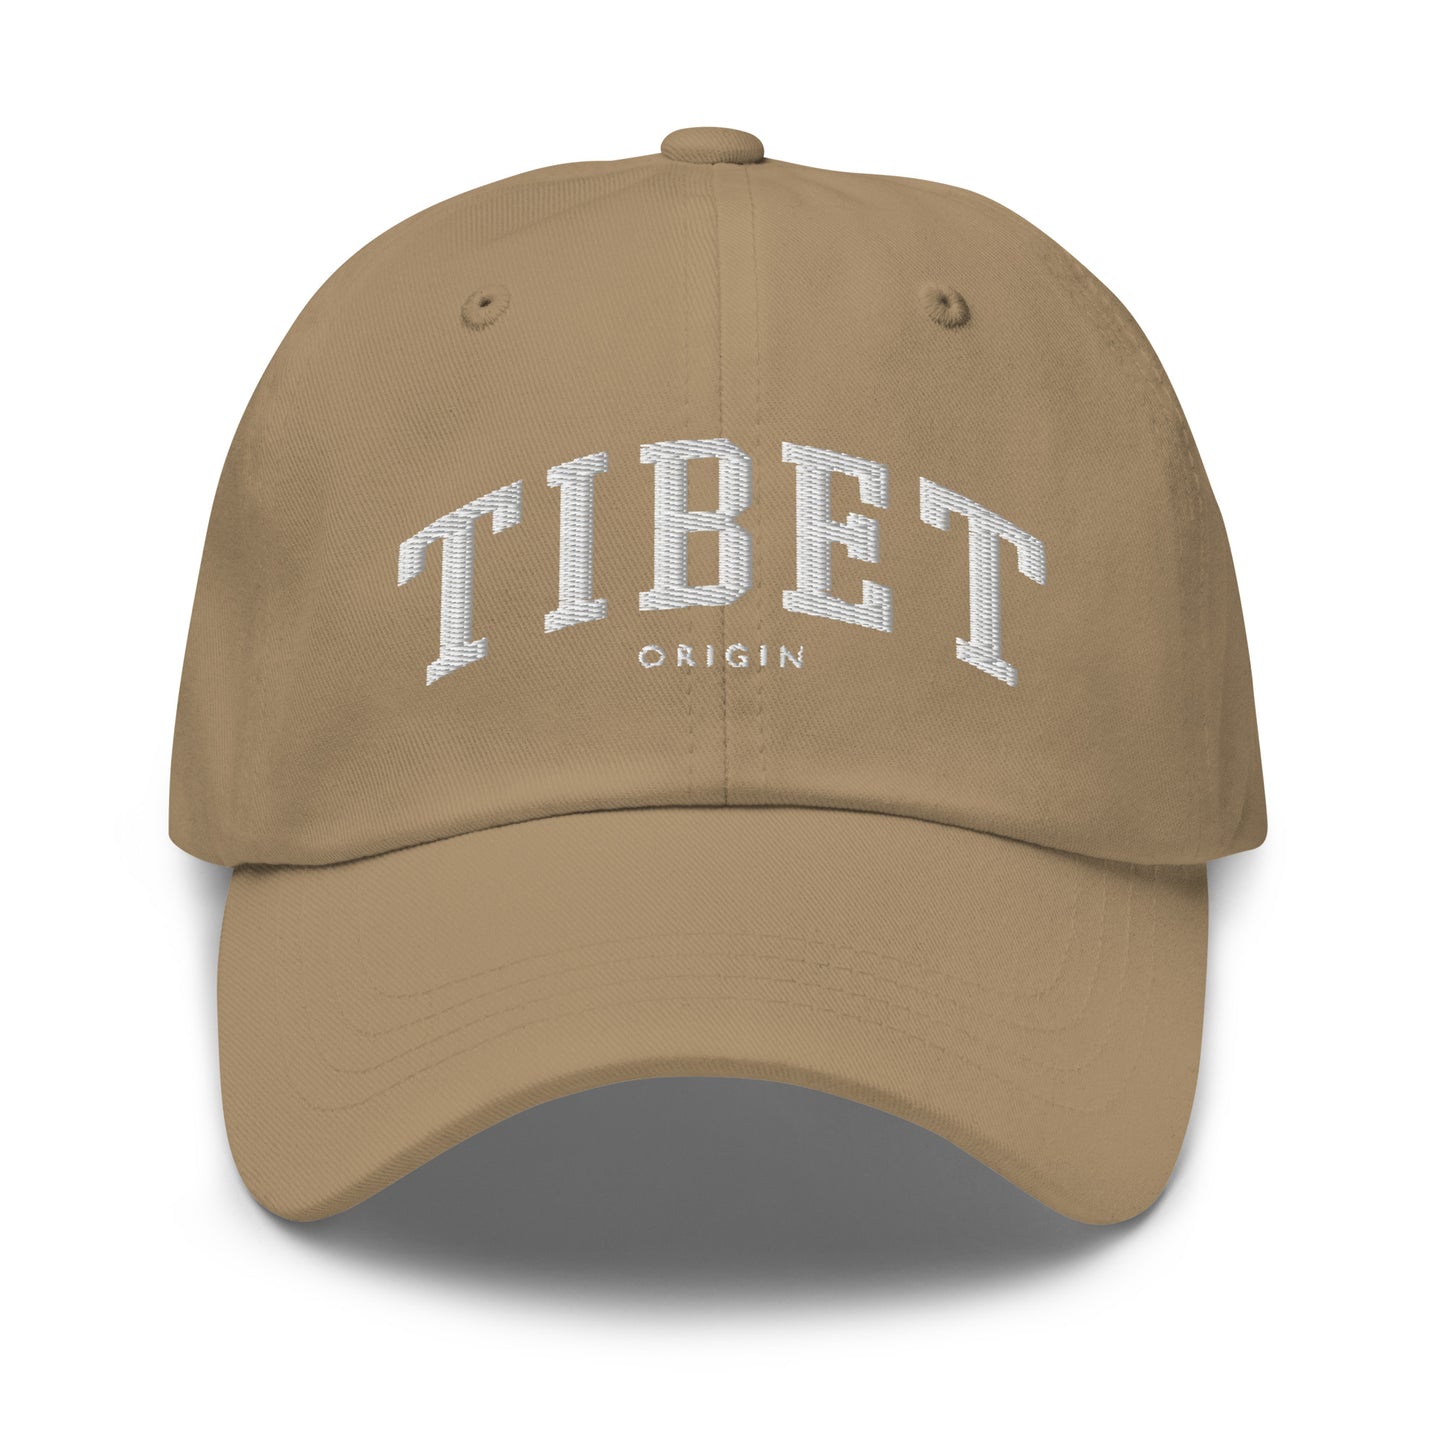 TIBET - TIBETAN - TIBET CLOTH - TIBET FASHION - TIBETAN HAT - TIBET CAP - TIBETAN CAP - TIBETAN CULTURE - Tibet embroidered premium hat for daily wear